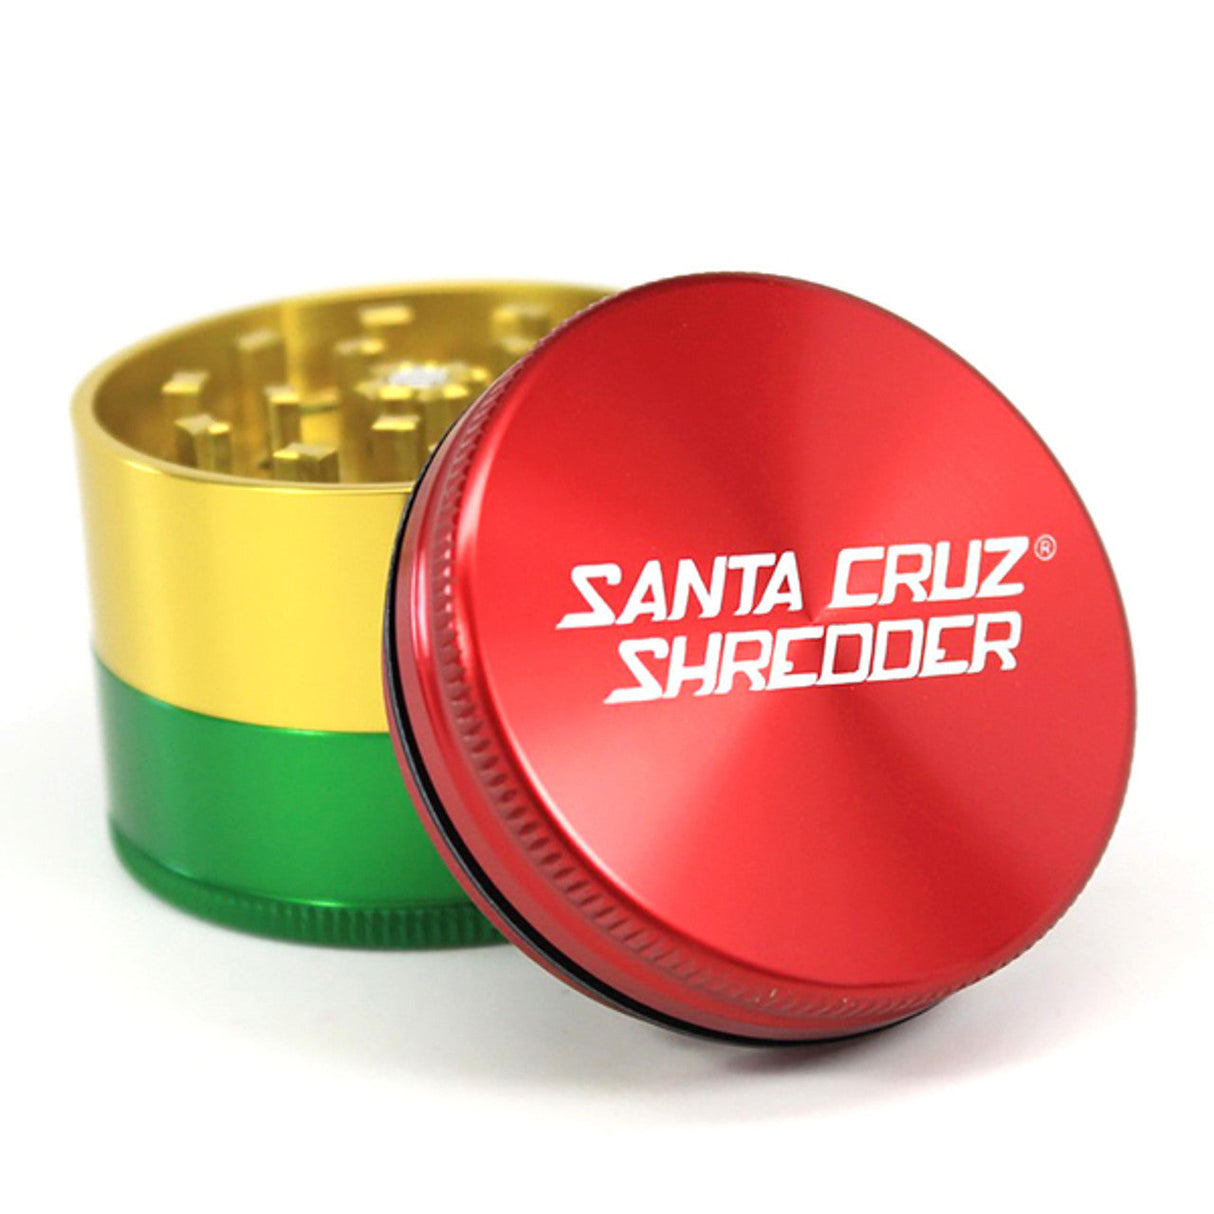 Santa Cruz Shredder Medium 3-Piece Grinder in Rasta colors, compact aluminum design, front view